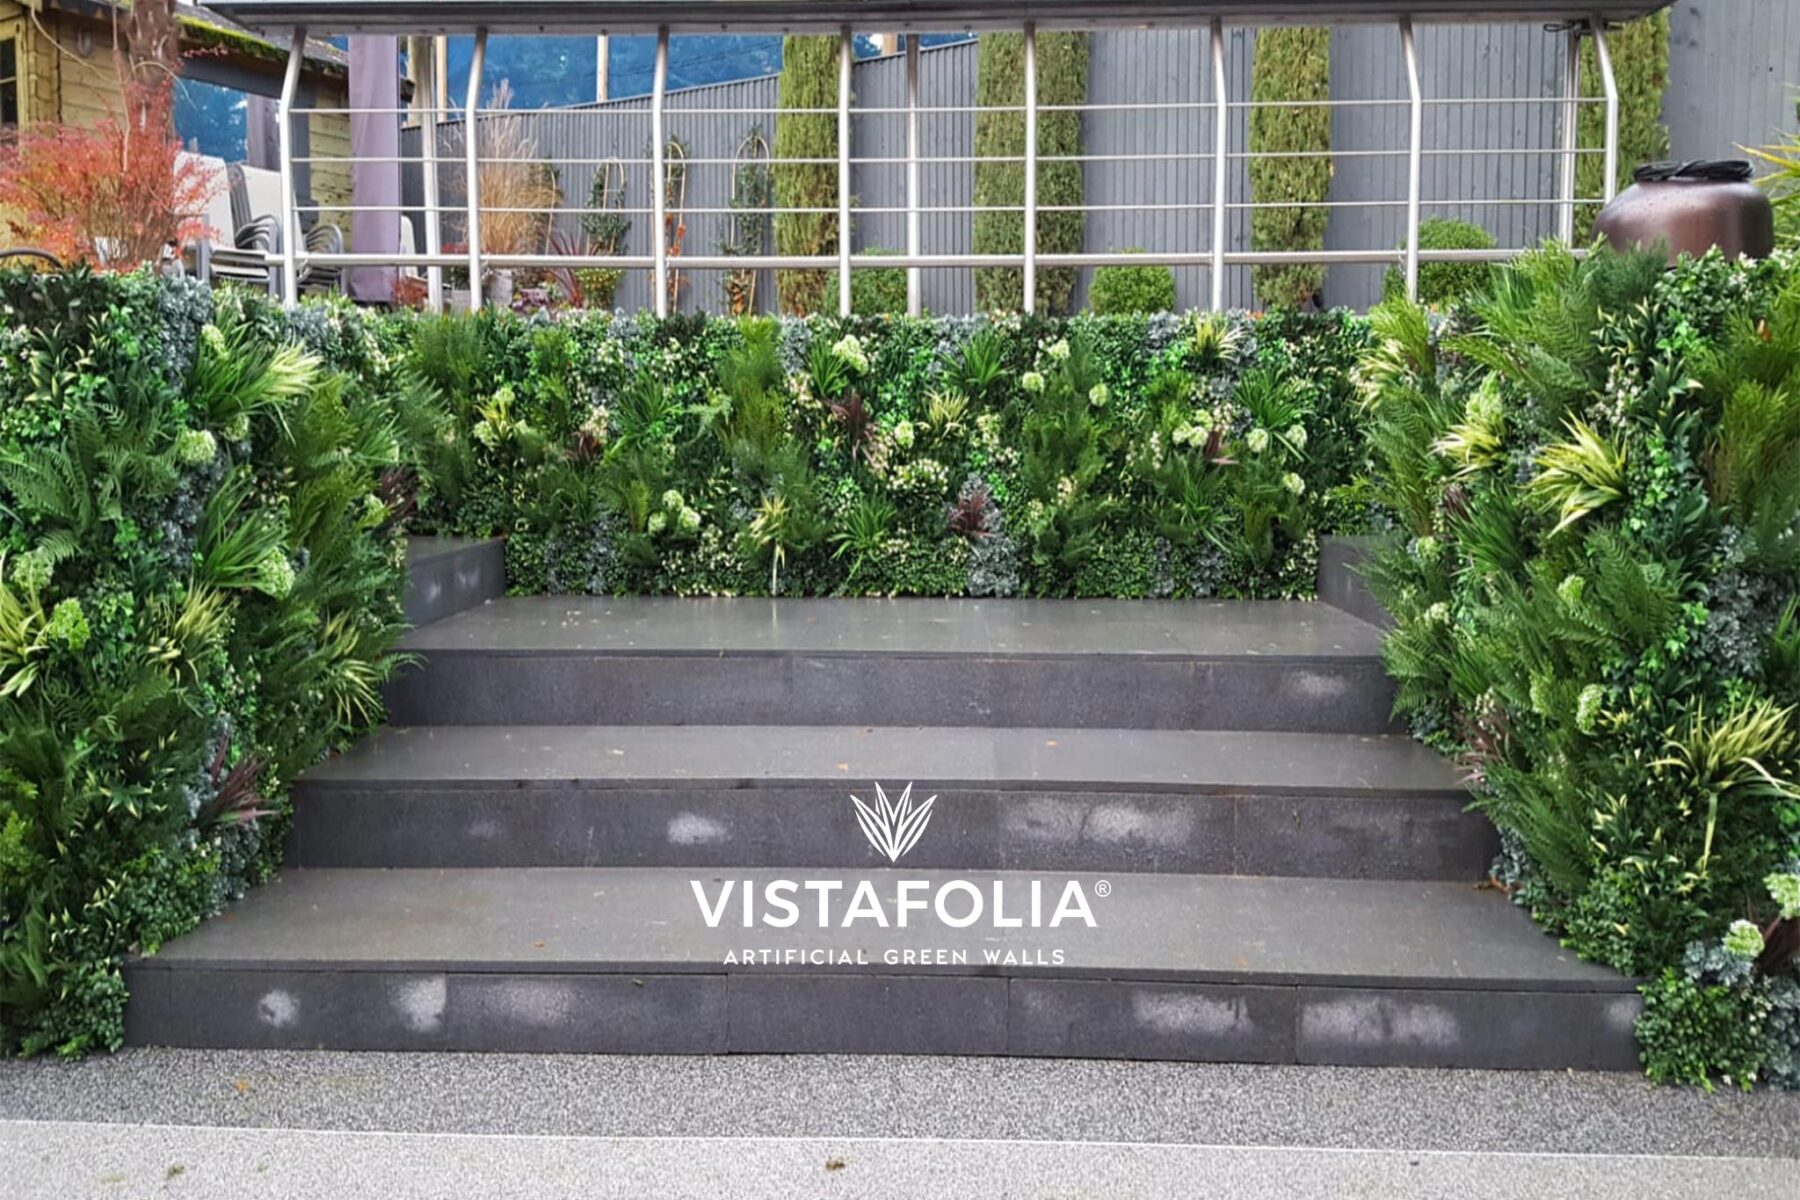 vistafolia green walls, artificial grass